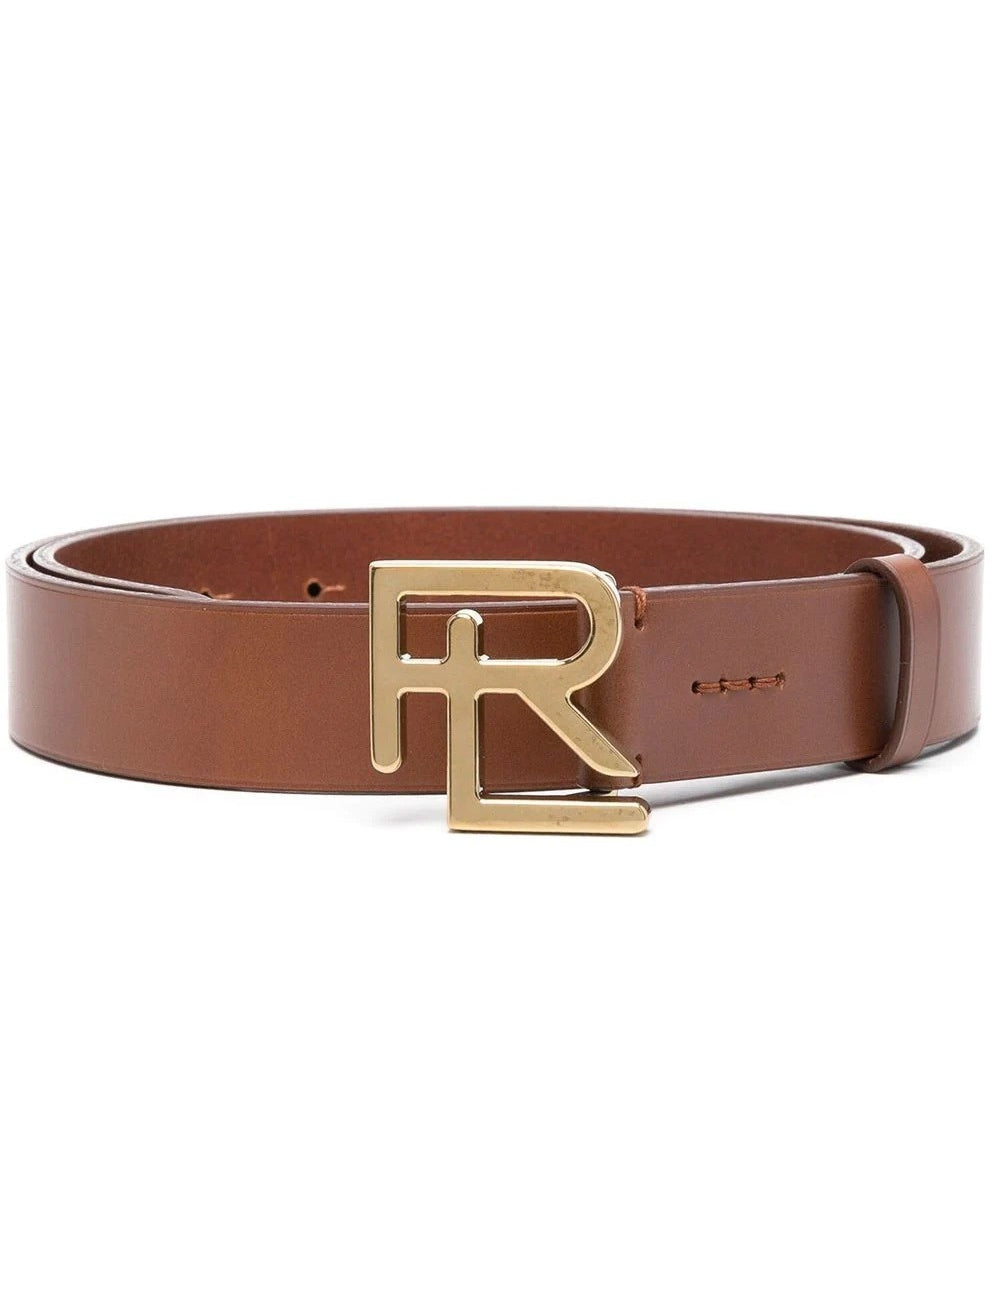 rl-logo-smooth-leather-belt.jpg